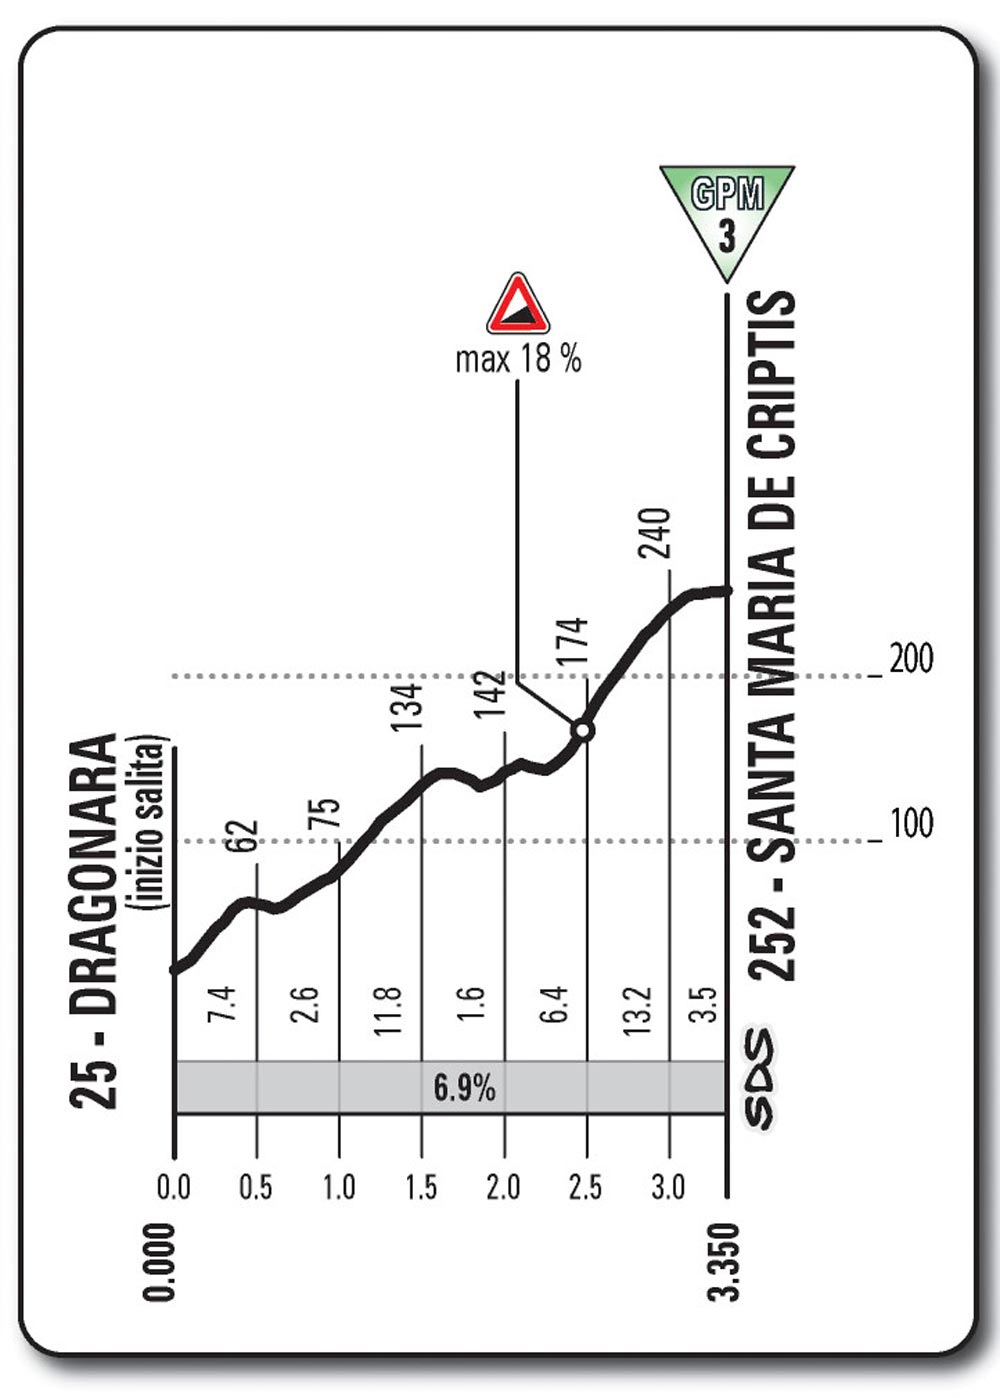 Giro d'Italia 2013 Stage 7 climb details